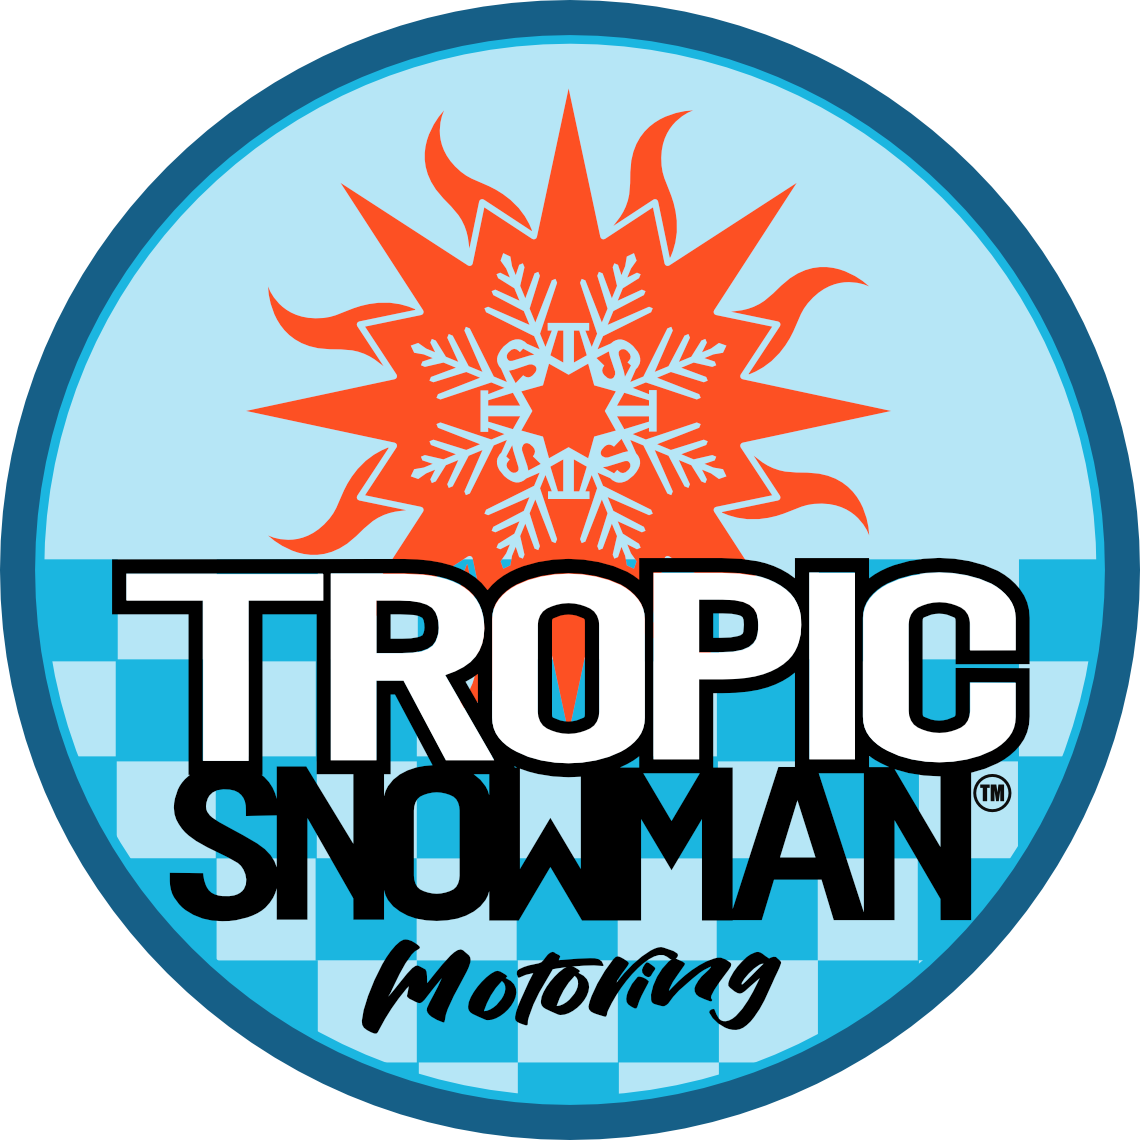 Tropic Snowman Motoring Art Merchandise Shop